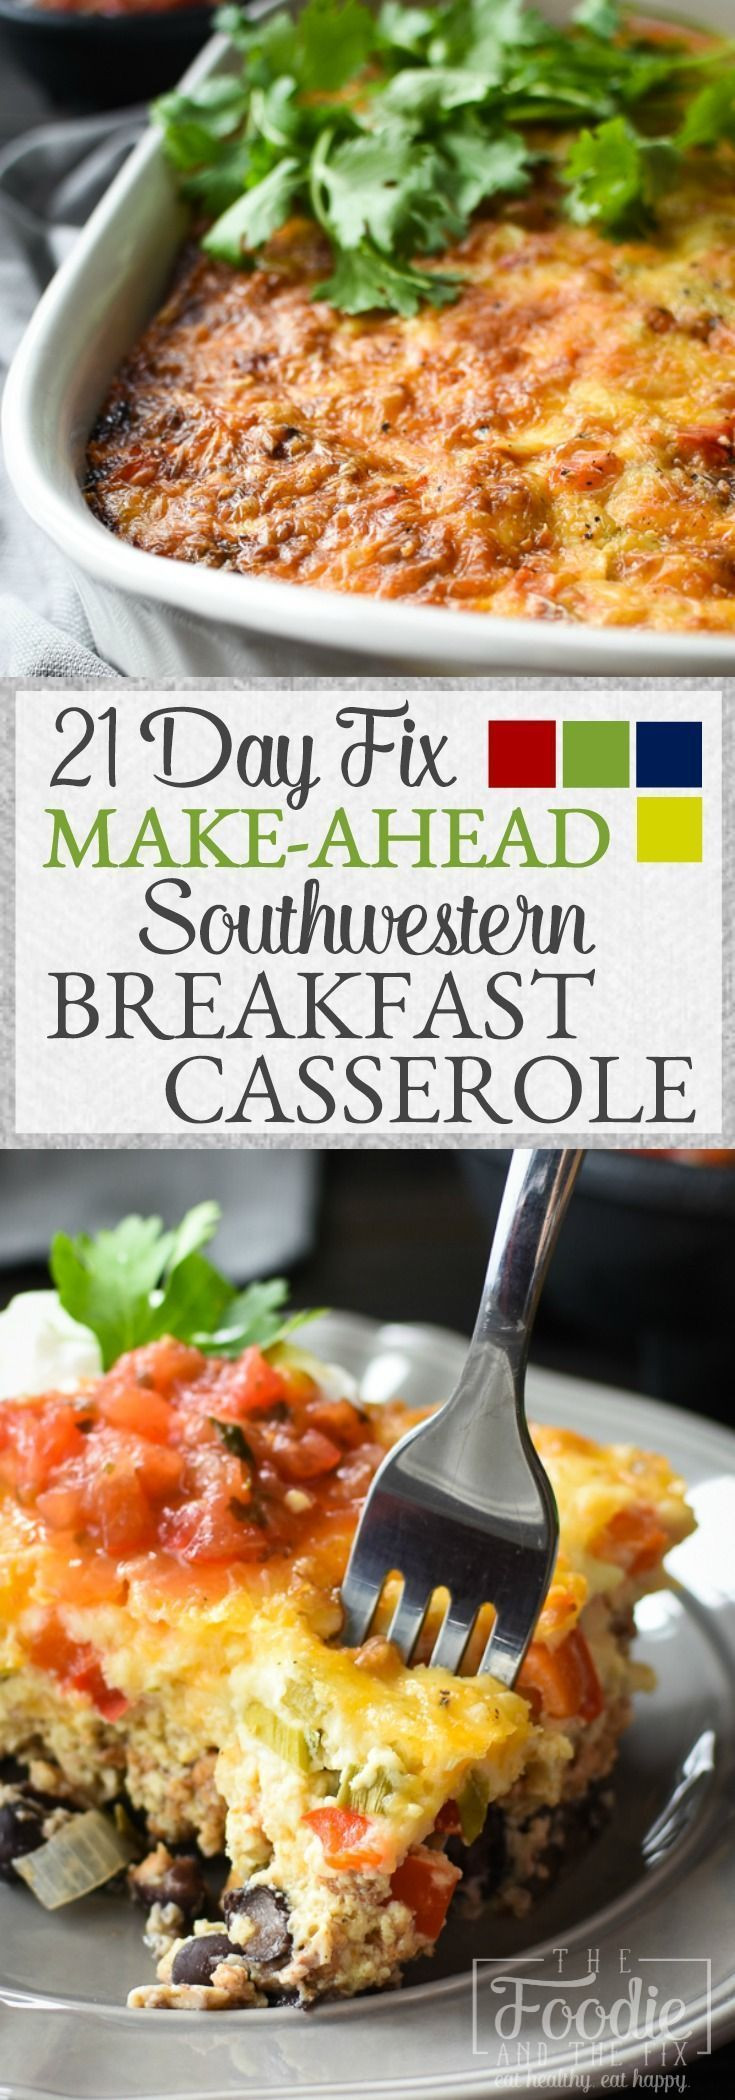 Easy Make Ahead Company Dinners
 This easy 21 Day Fix Make Ahead Southwestern Breakfast